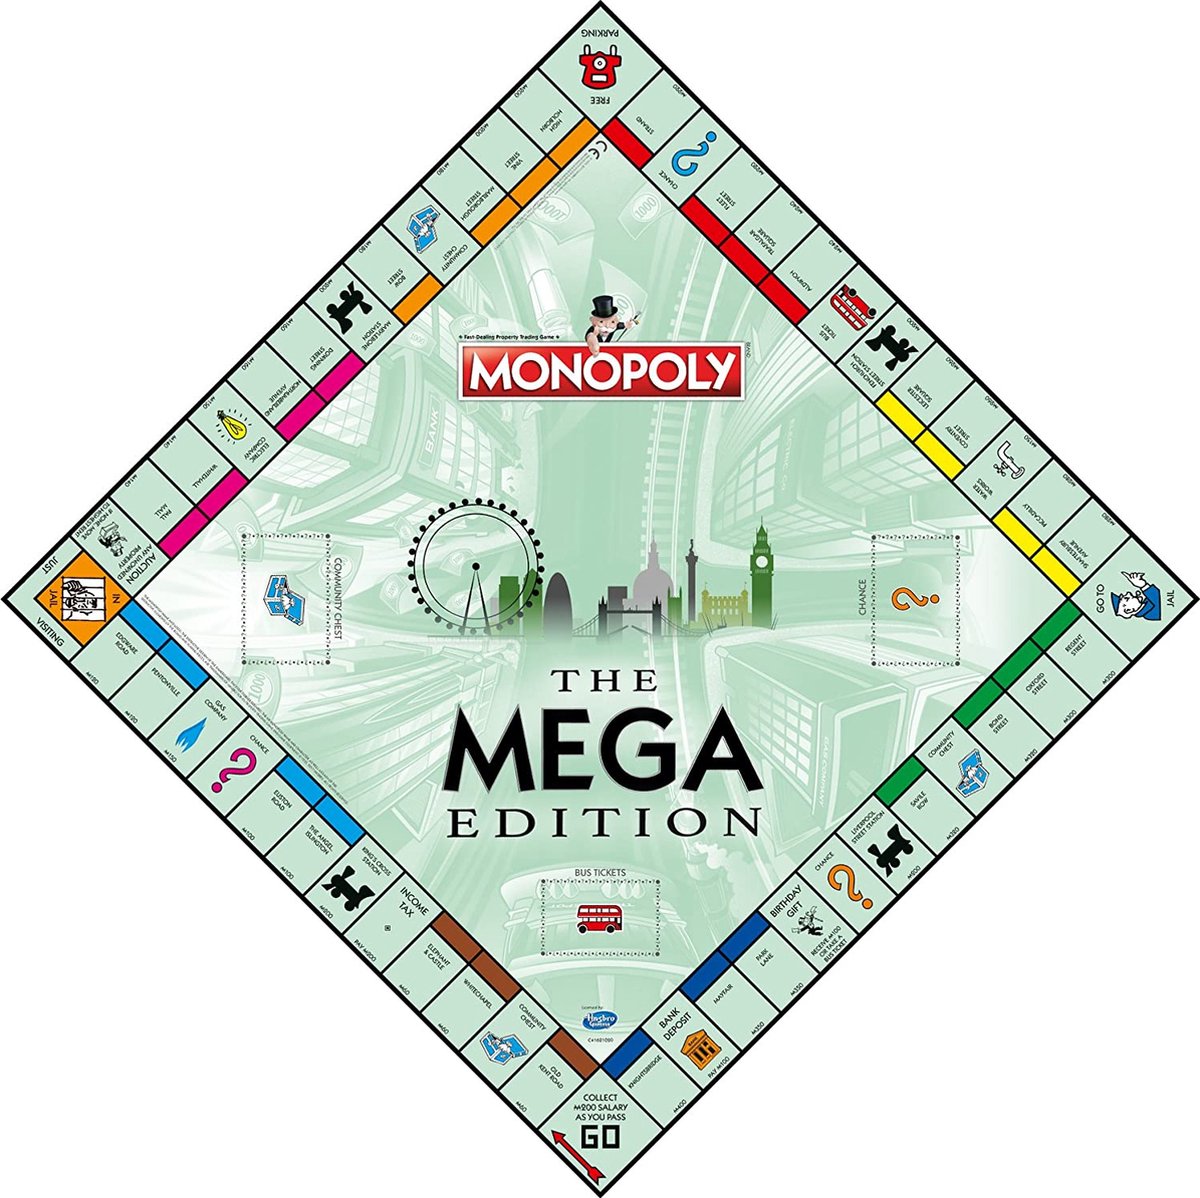 trog overal vraag naar Monopoly Mega editie - ultra uitgebreide editie - met wolkenkrabbers |  Games | bol.com